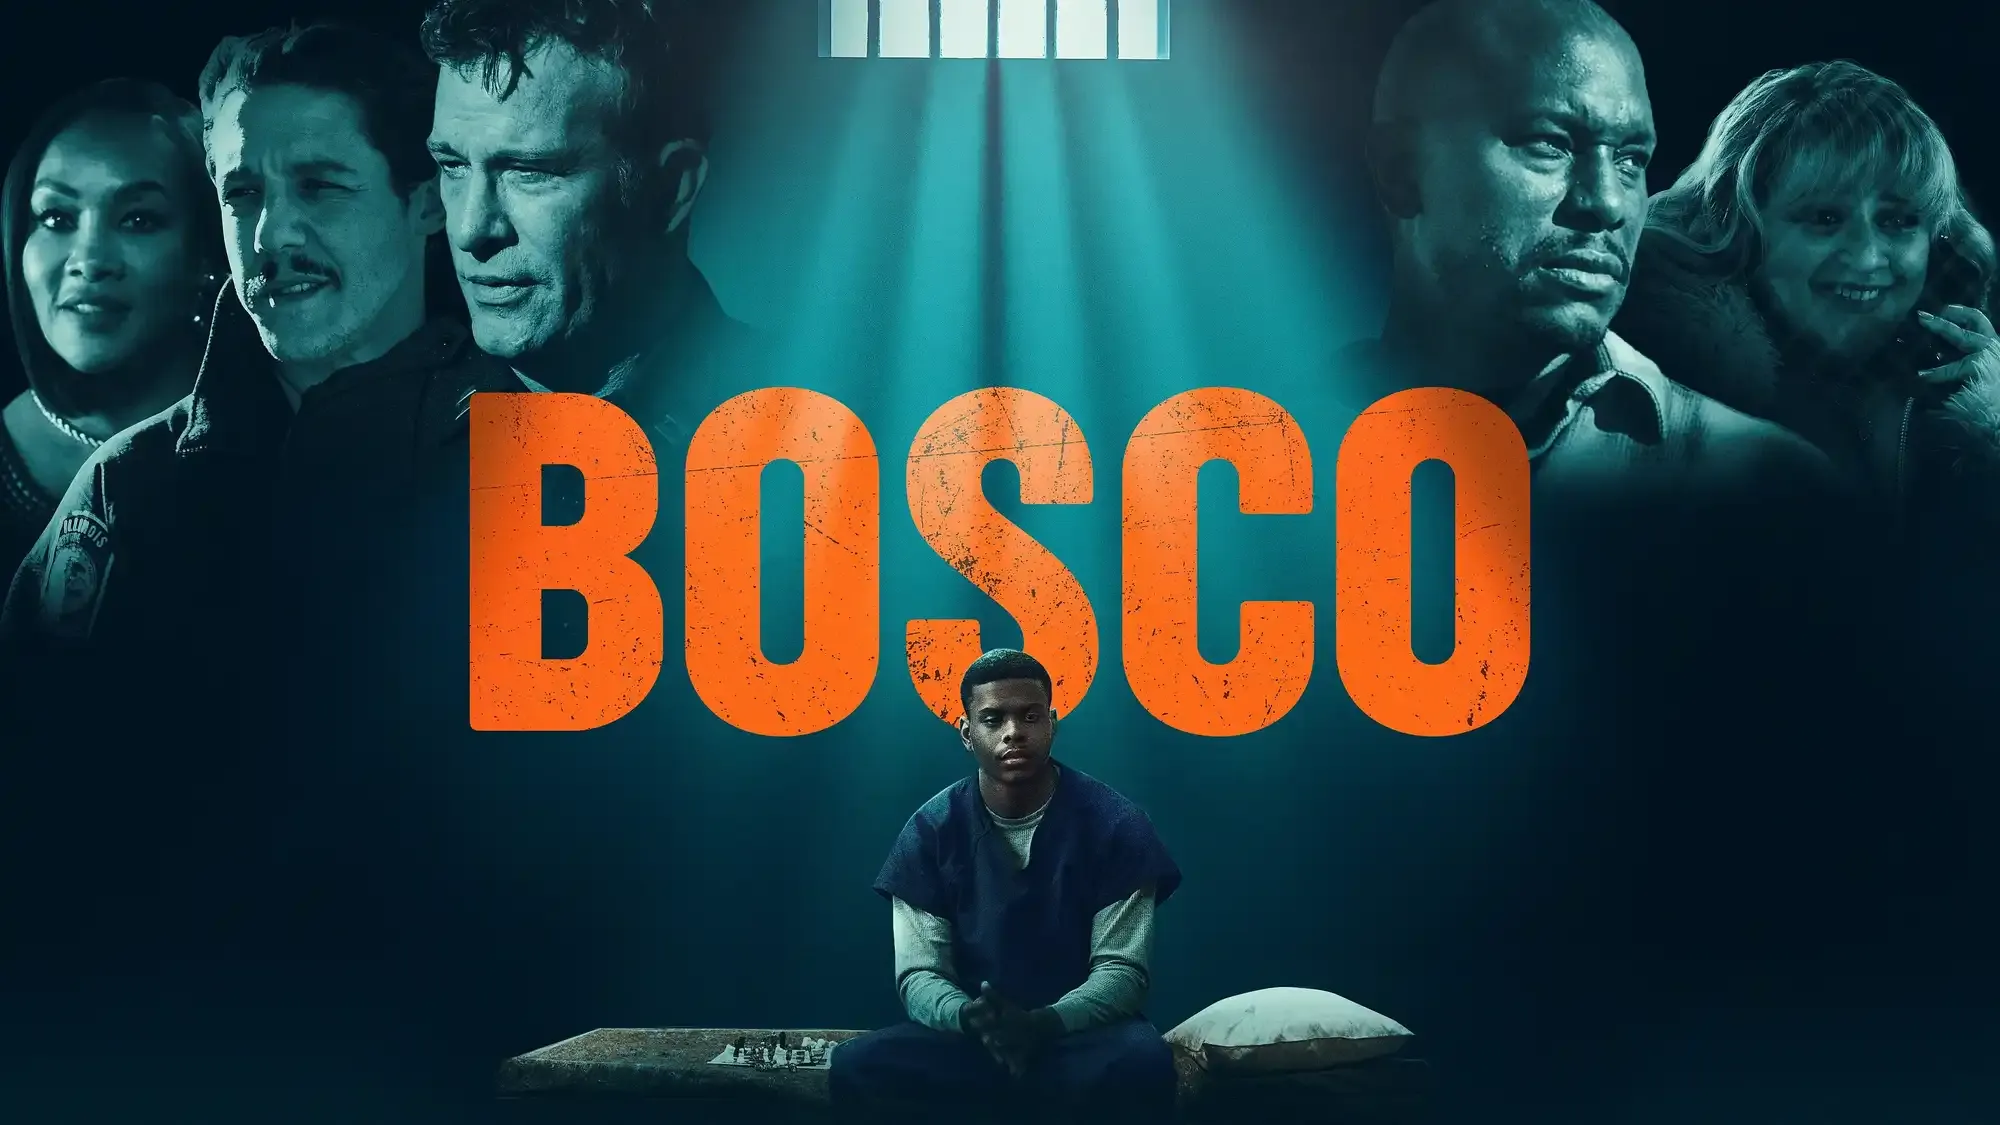 Bosco movie review